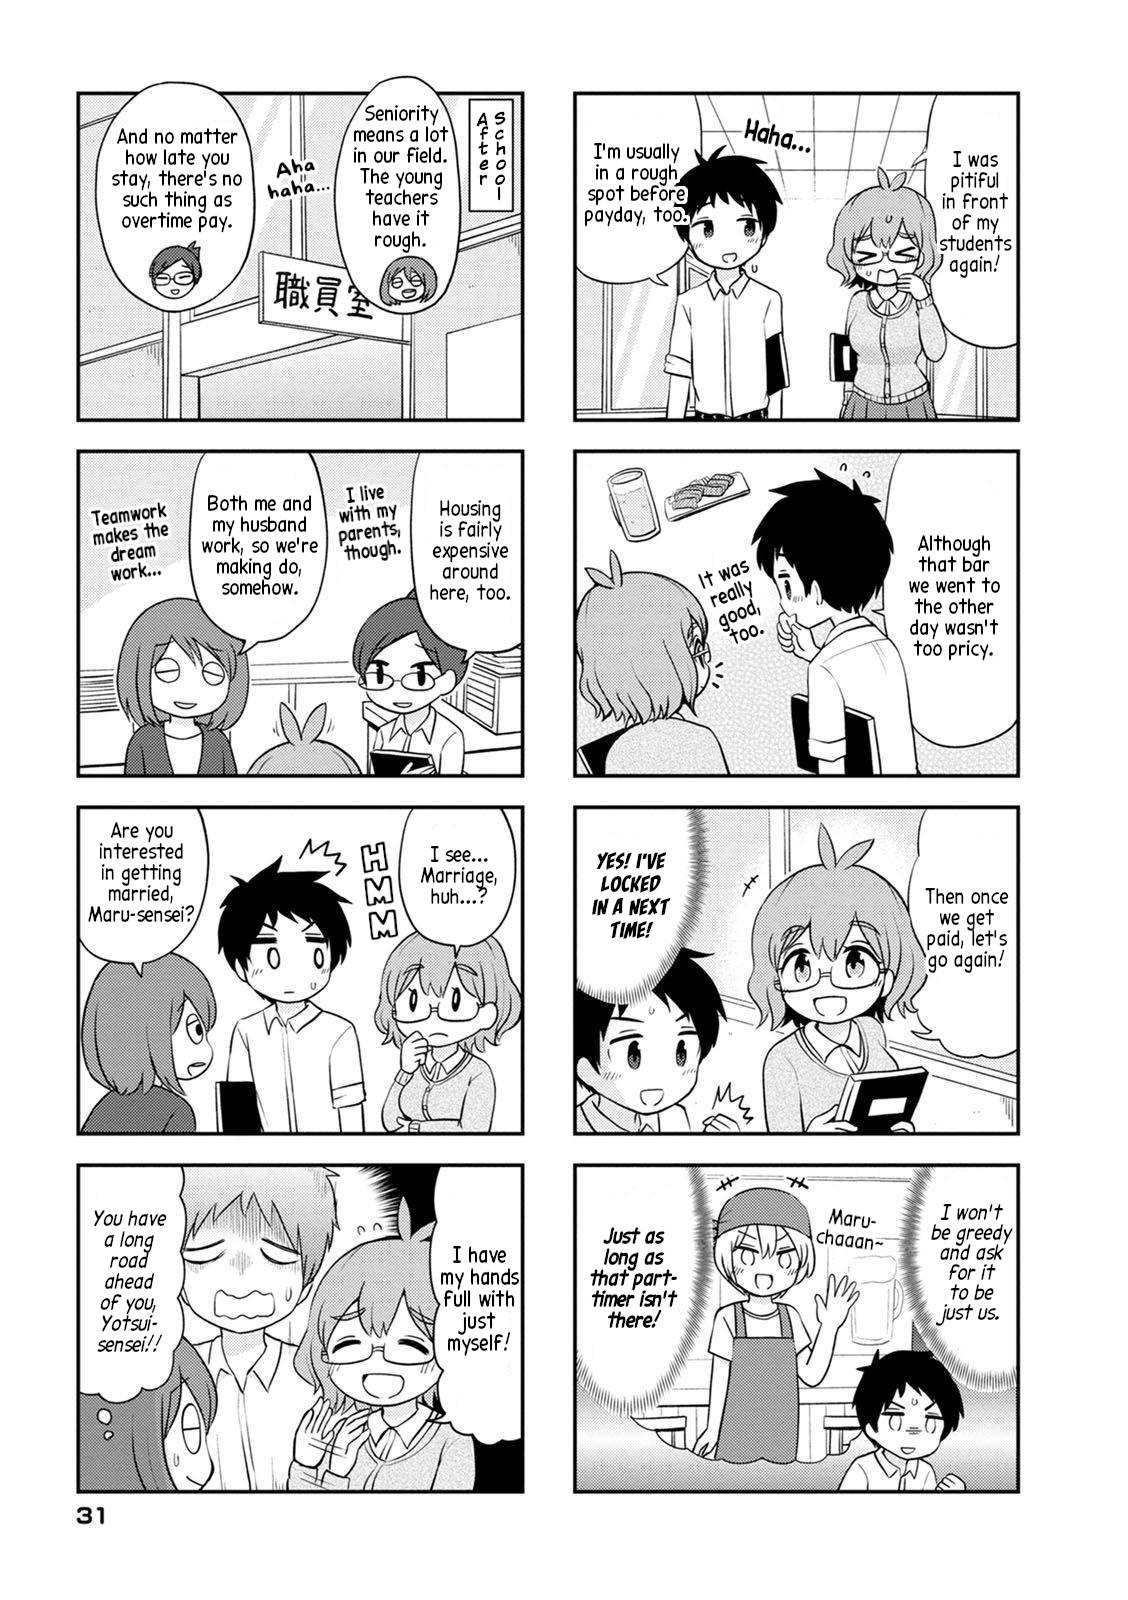 Maru-Sensei's ** Is Cute. - chapter 4 - #3